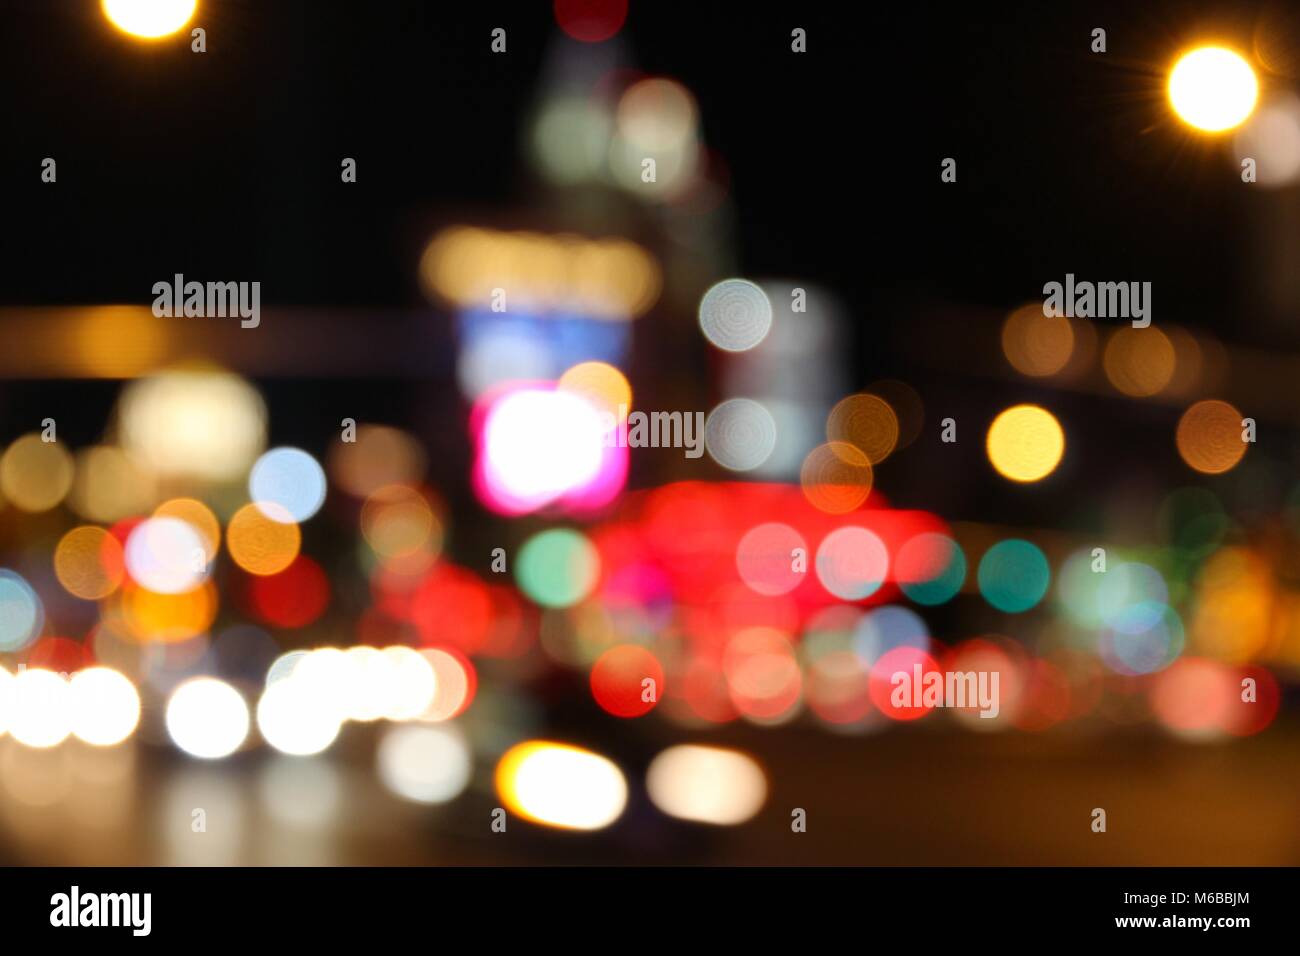 Las Vegas, Nevada, United States. Defocused city night lights - colorful evening view. Stock Photo